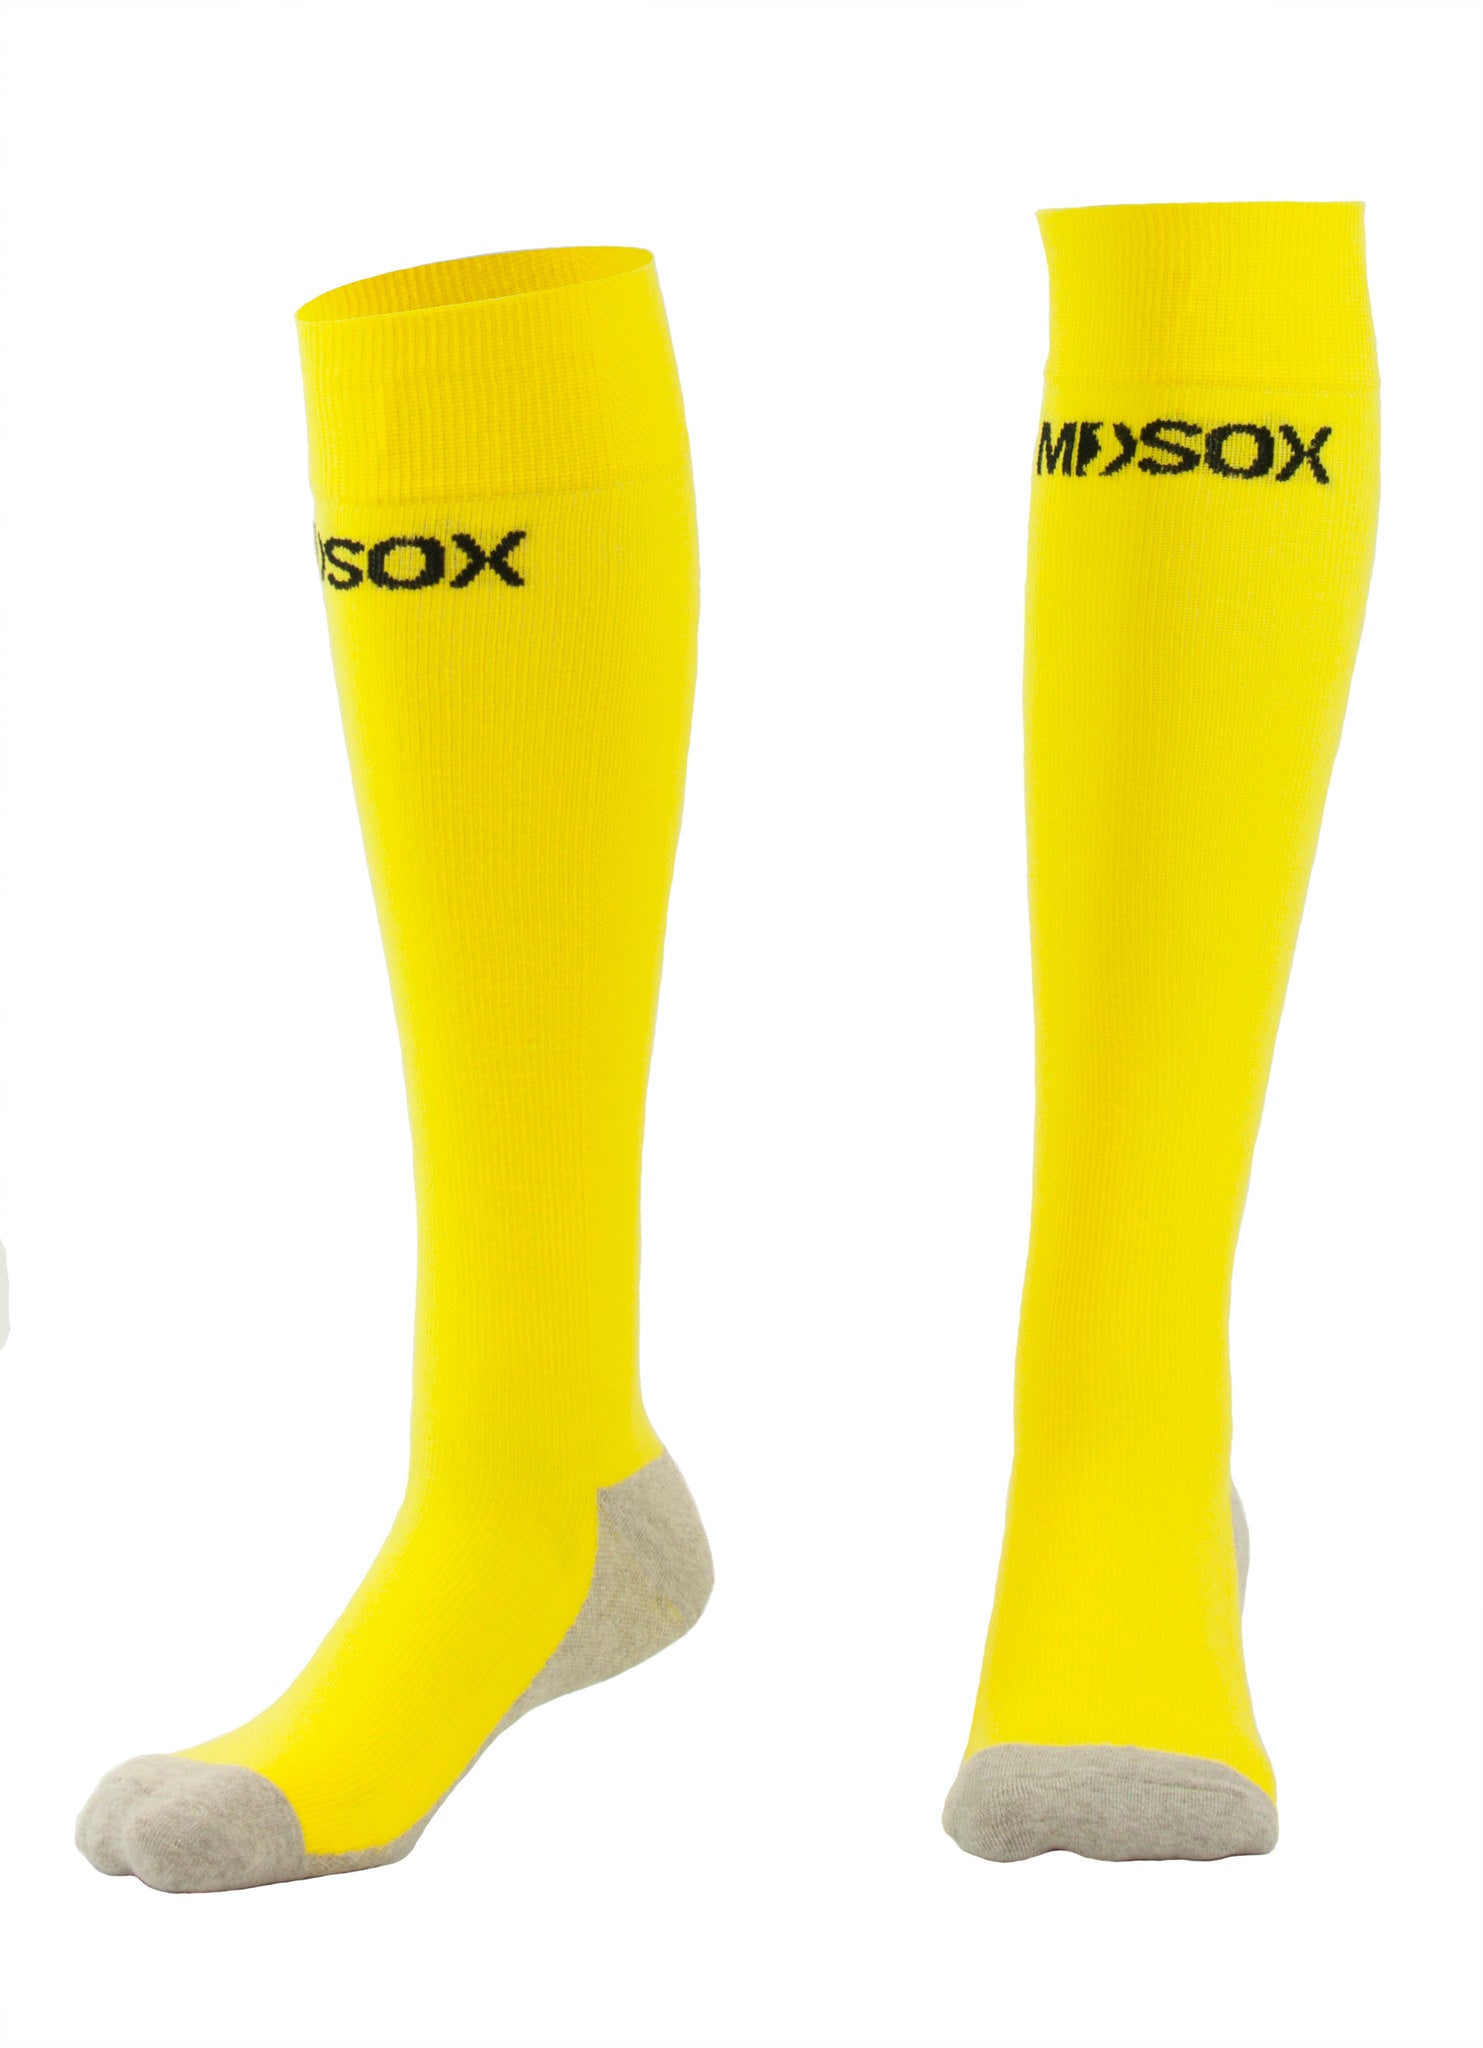 MDSOX 20-30mmHg Yellow